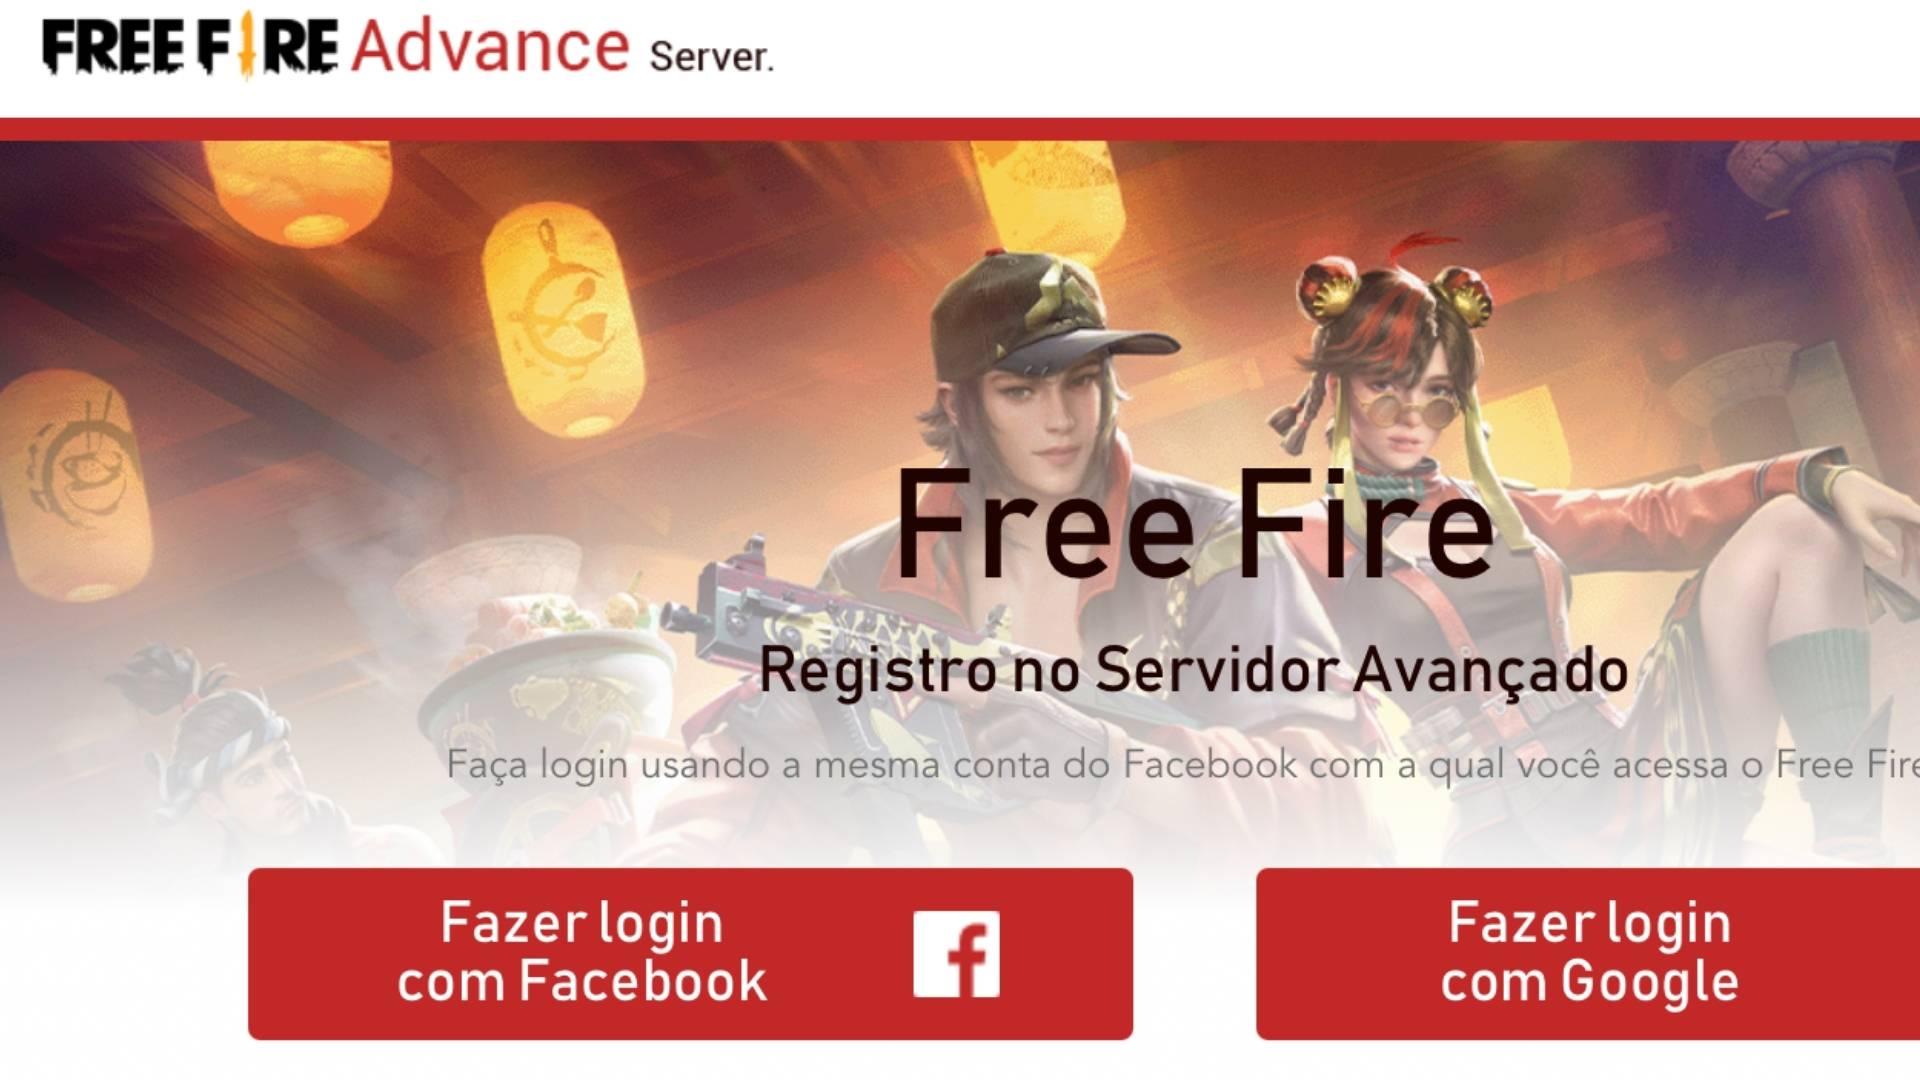 Download FREE FIRE ADVANCE SERVER